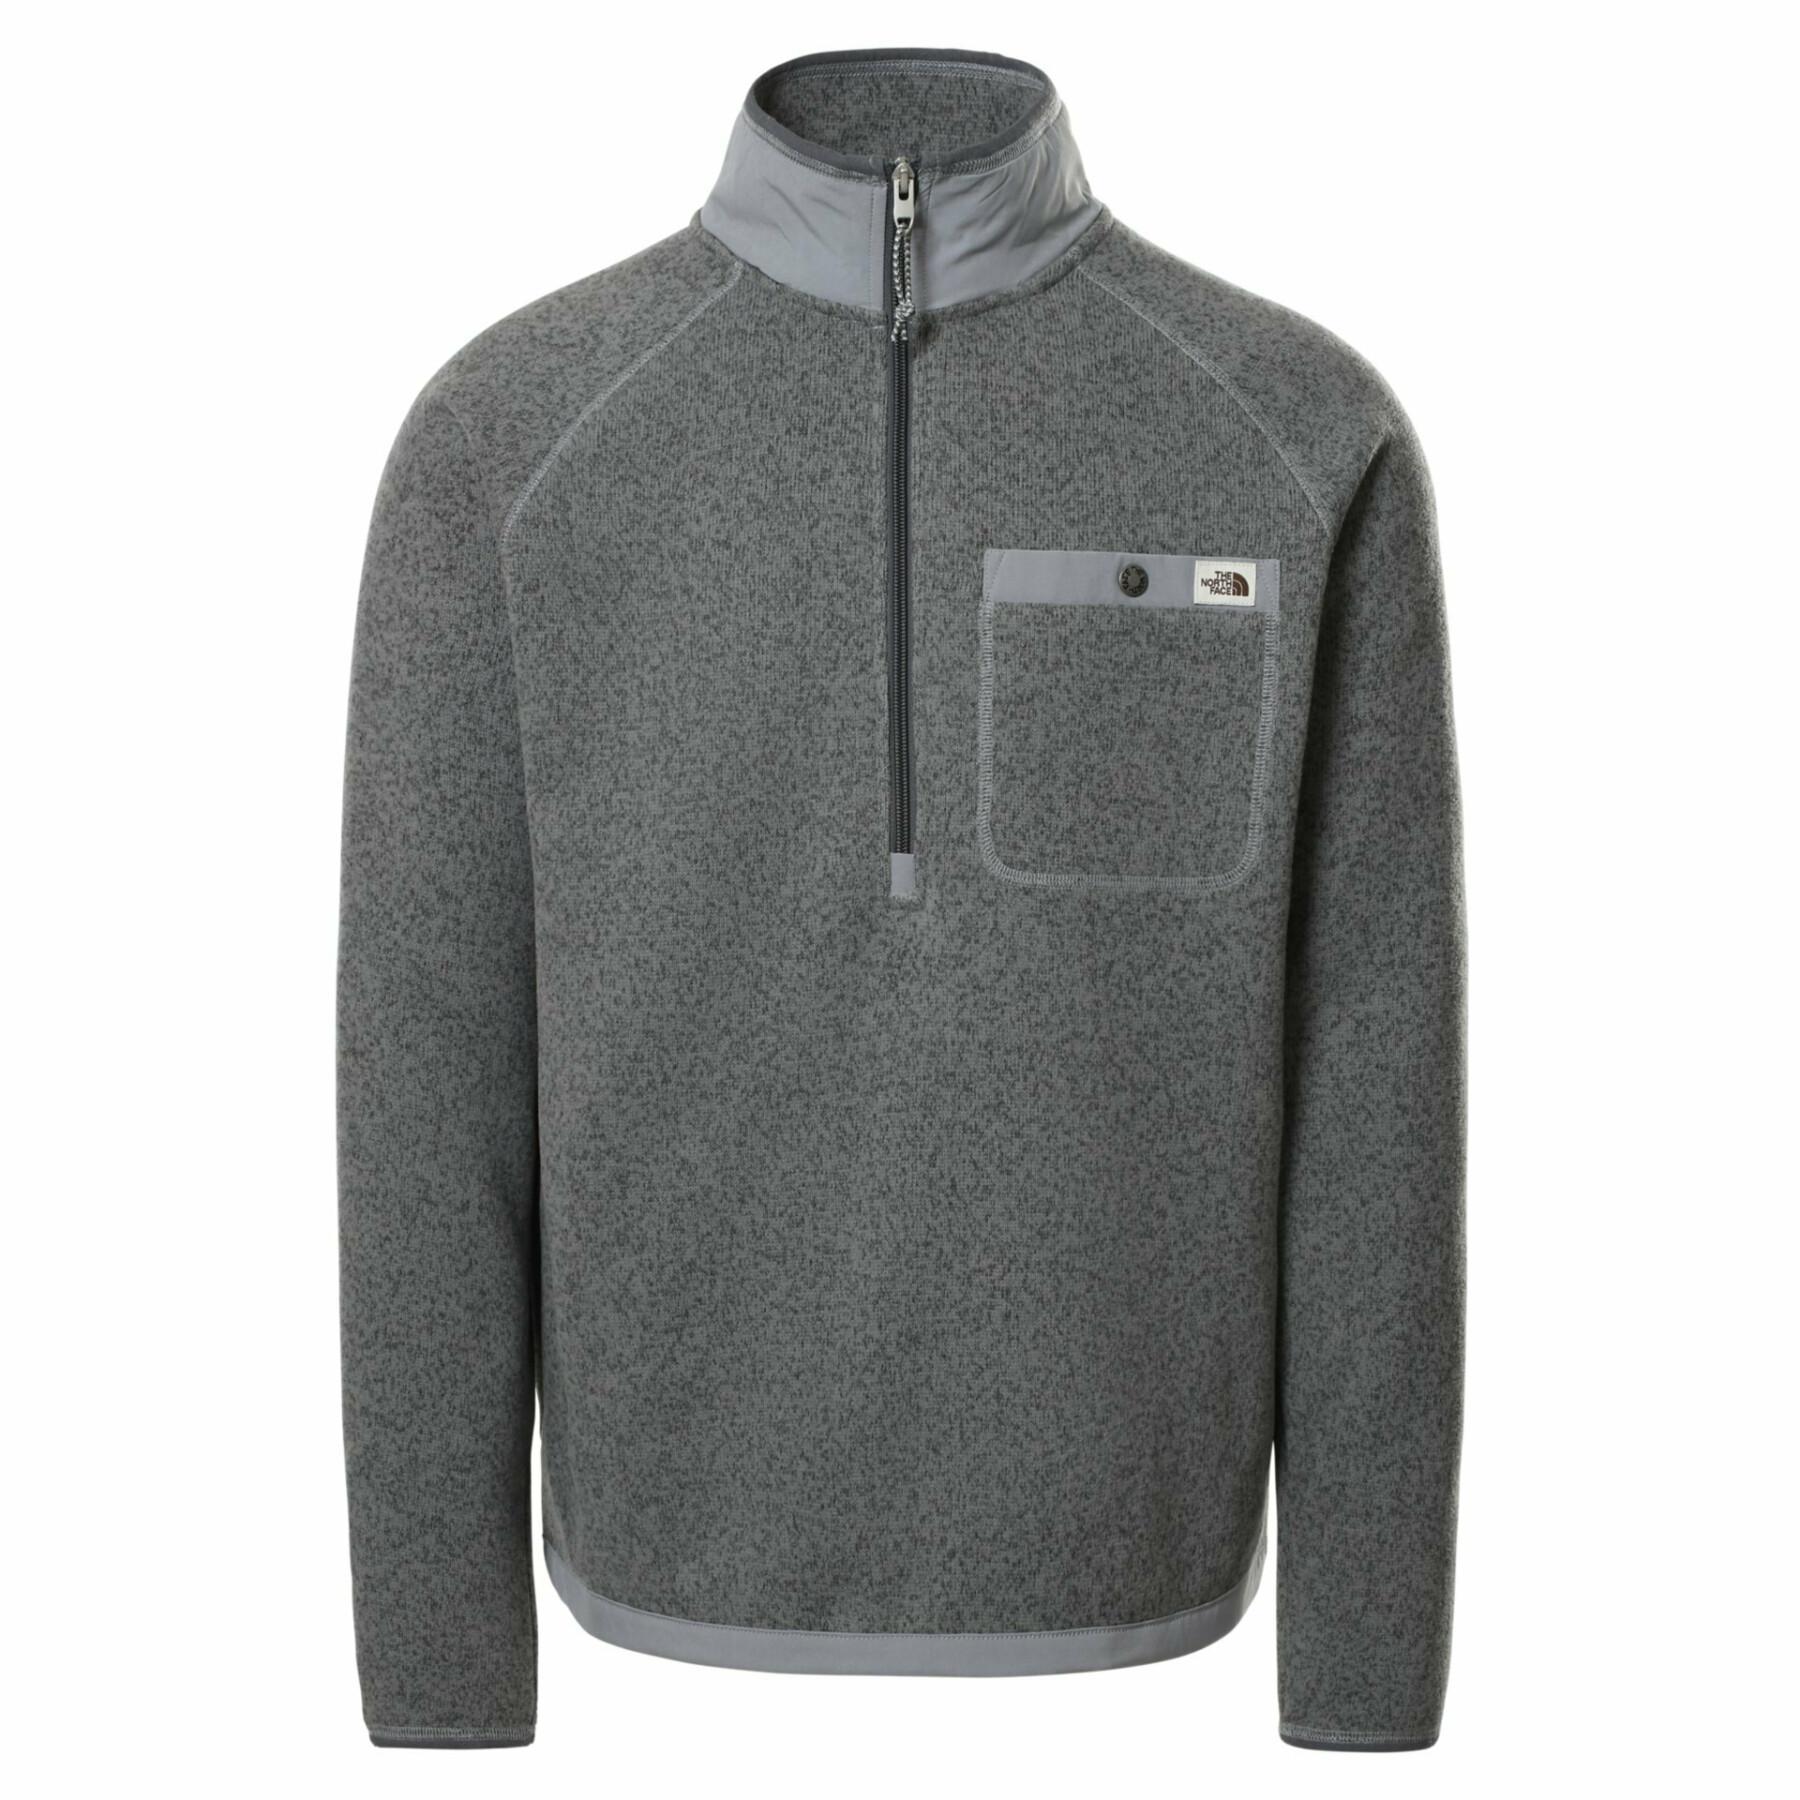 Sweatshirt with zip The North Face Gordon Lyons